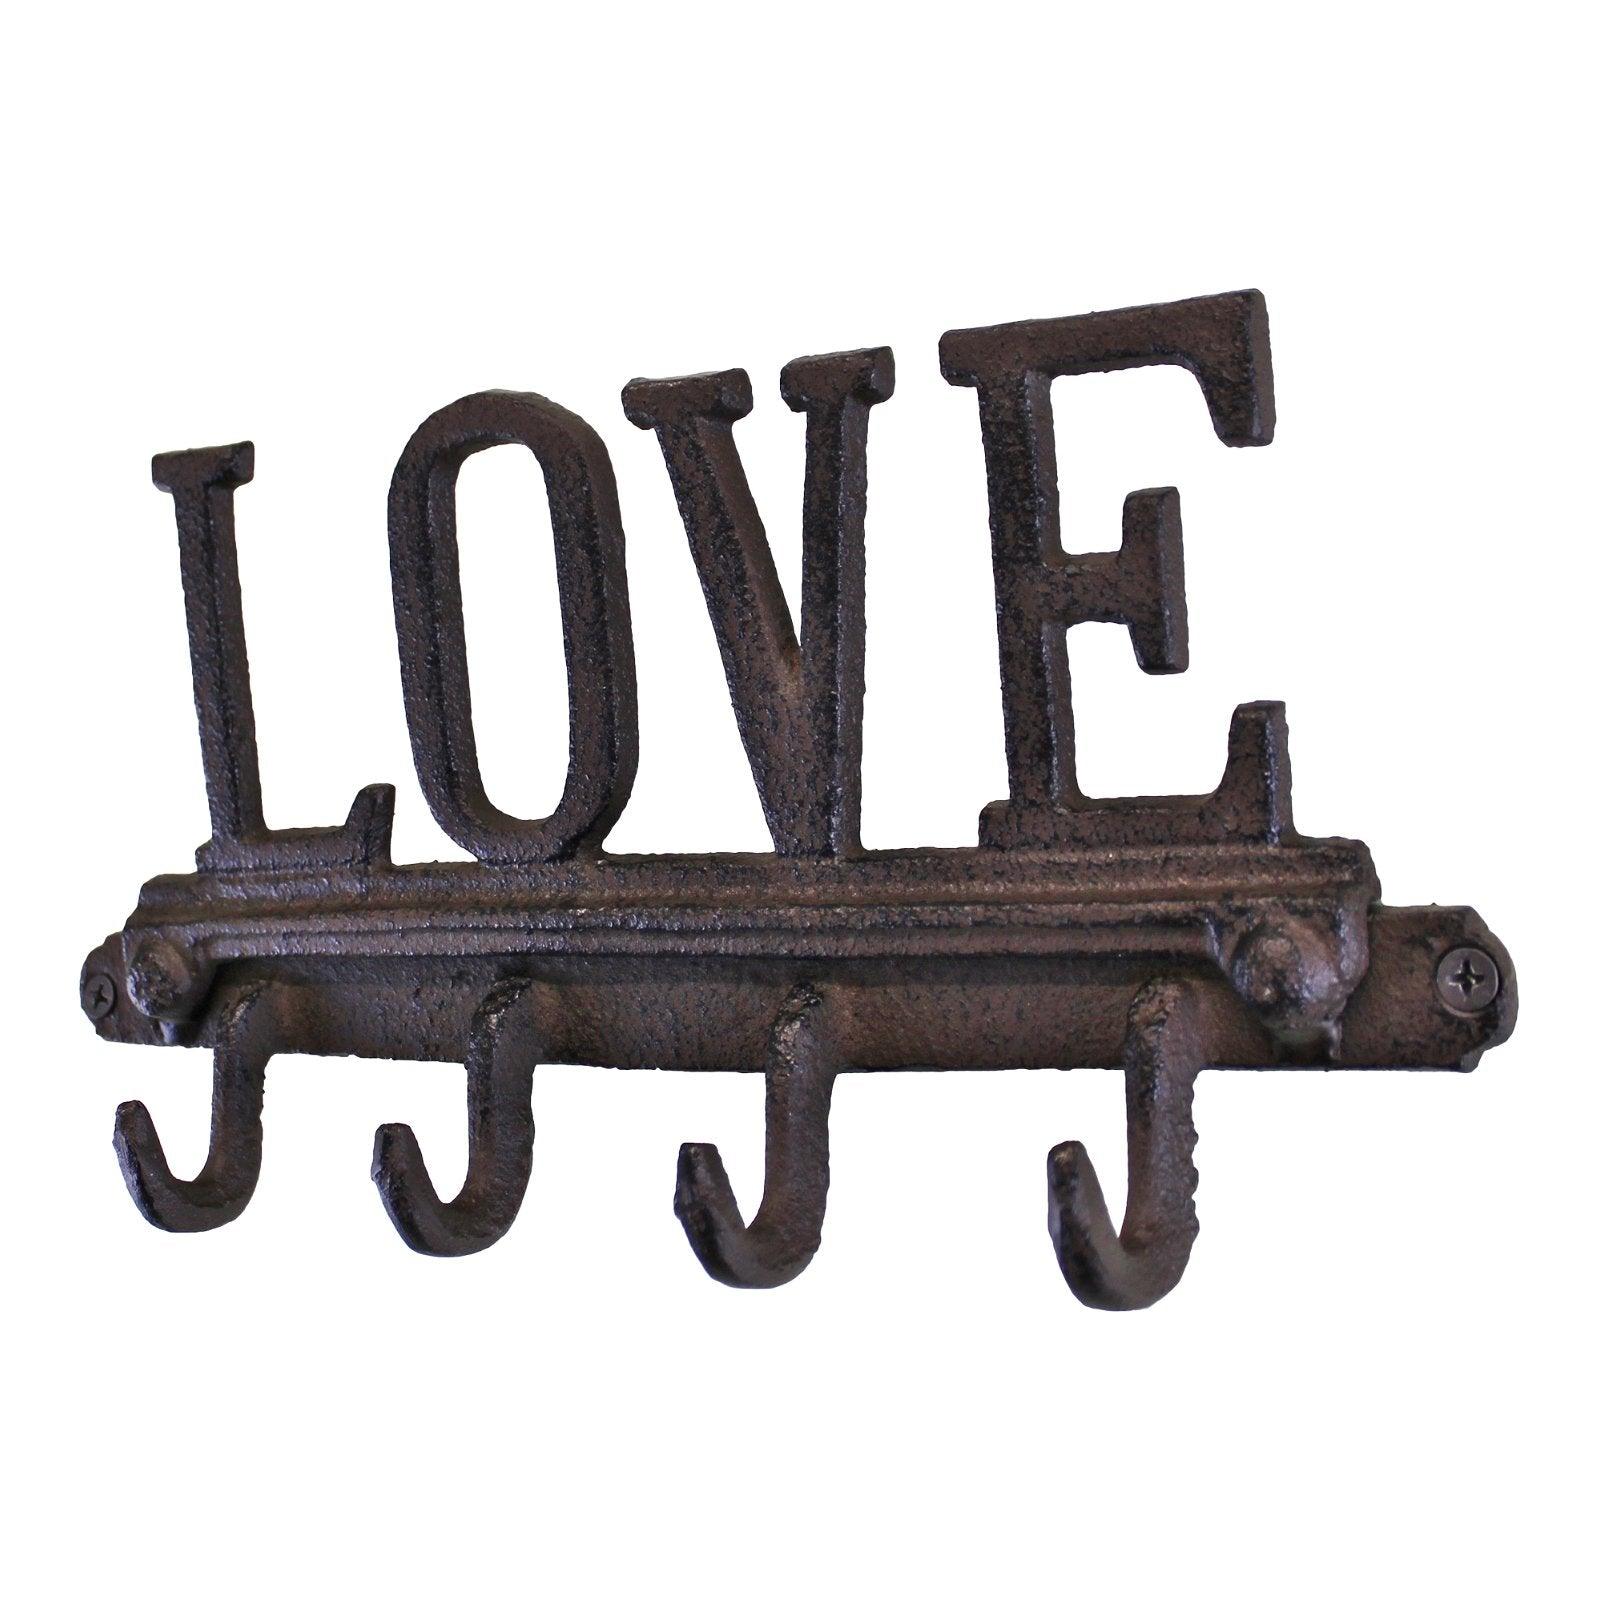 Rustic Cast Iron Wall Hooks, Love Design With 4 Hooks - £15.99 - Coat Hooks 